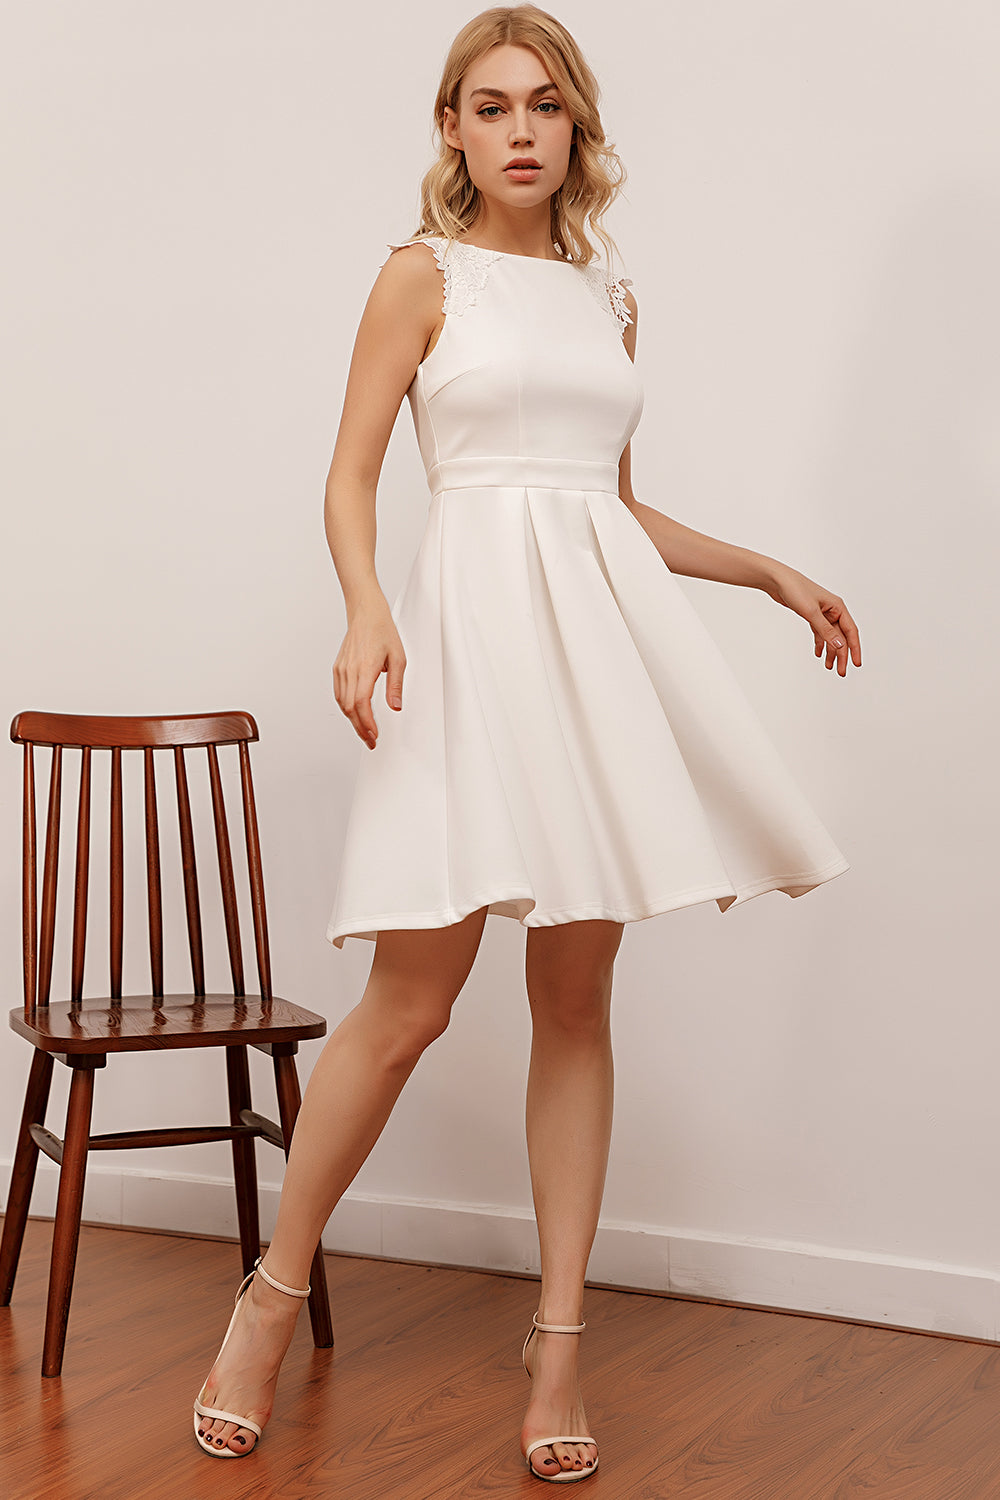 Simply White Lace Dress